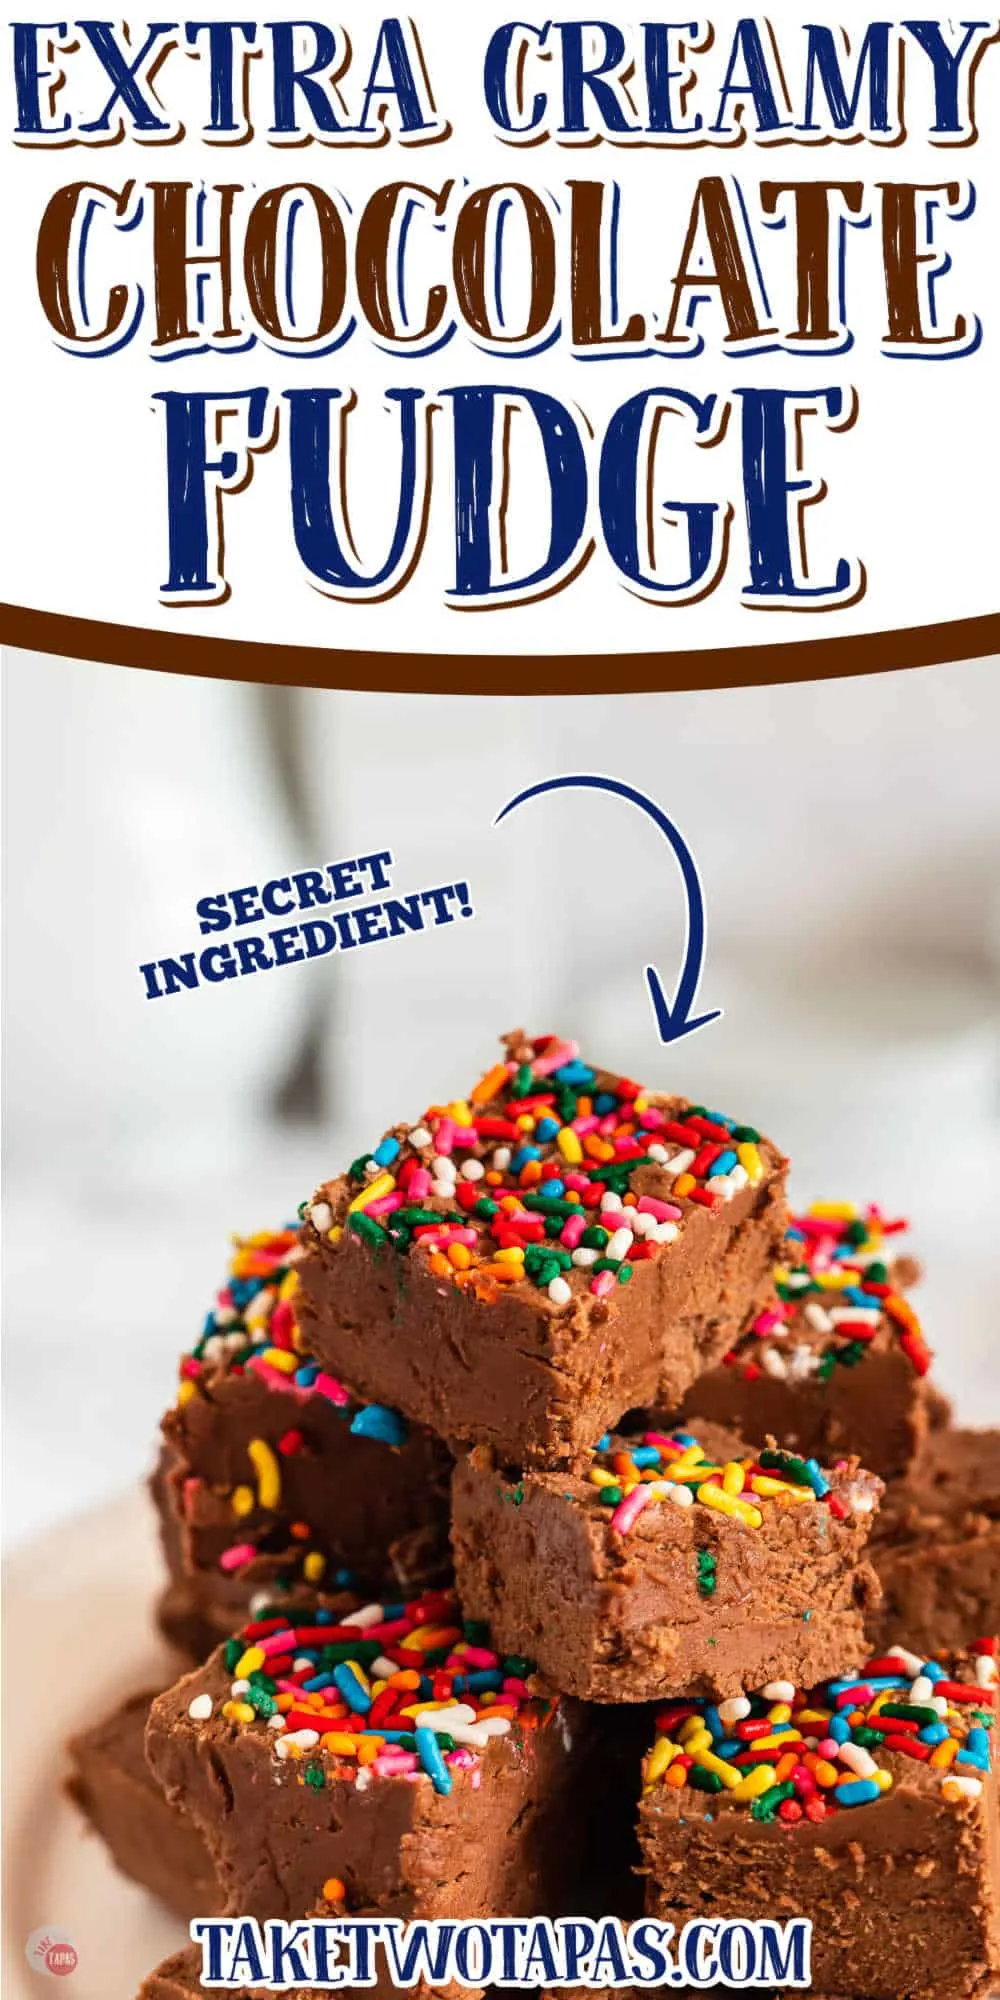 stack of fudge with text "secret ingredient"